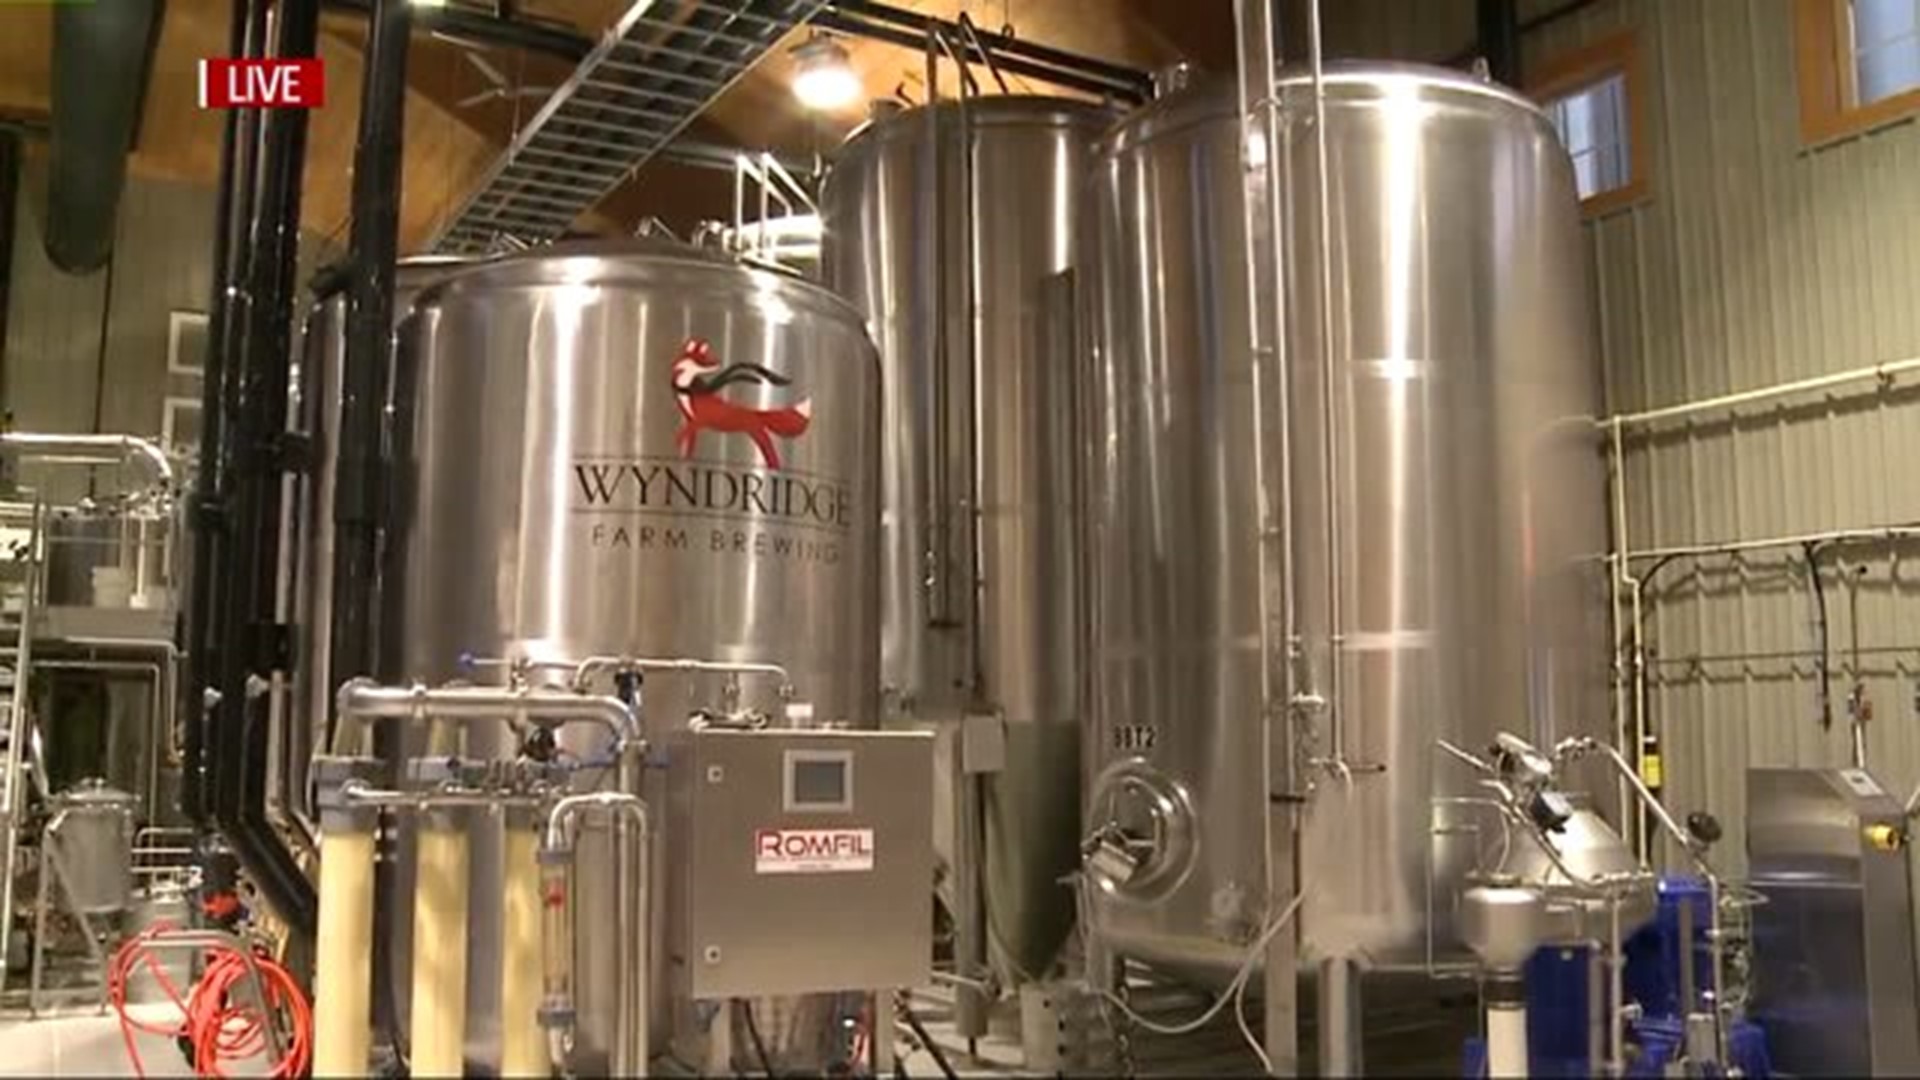 Wyndridge Farms process of amking a great brew